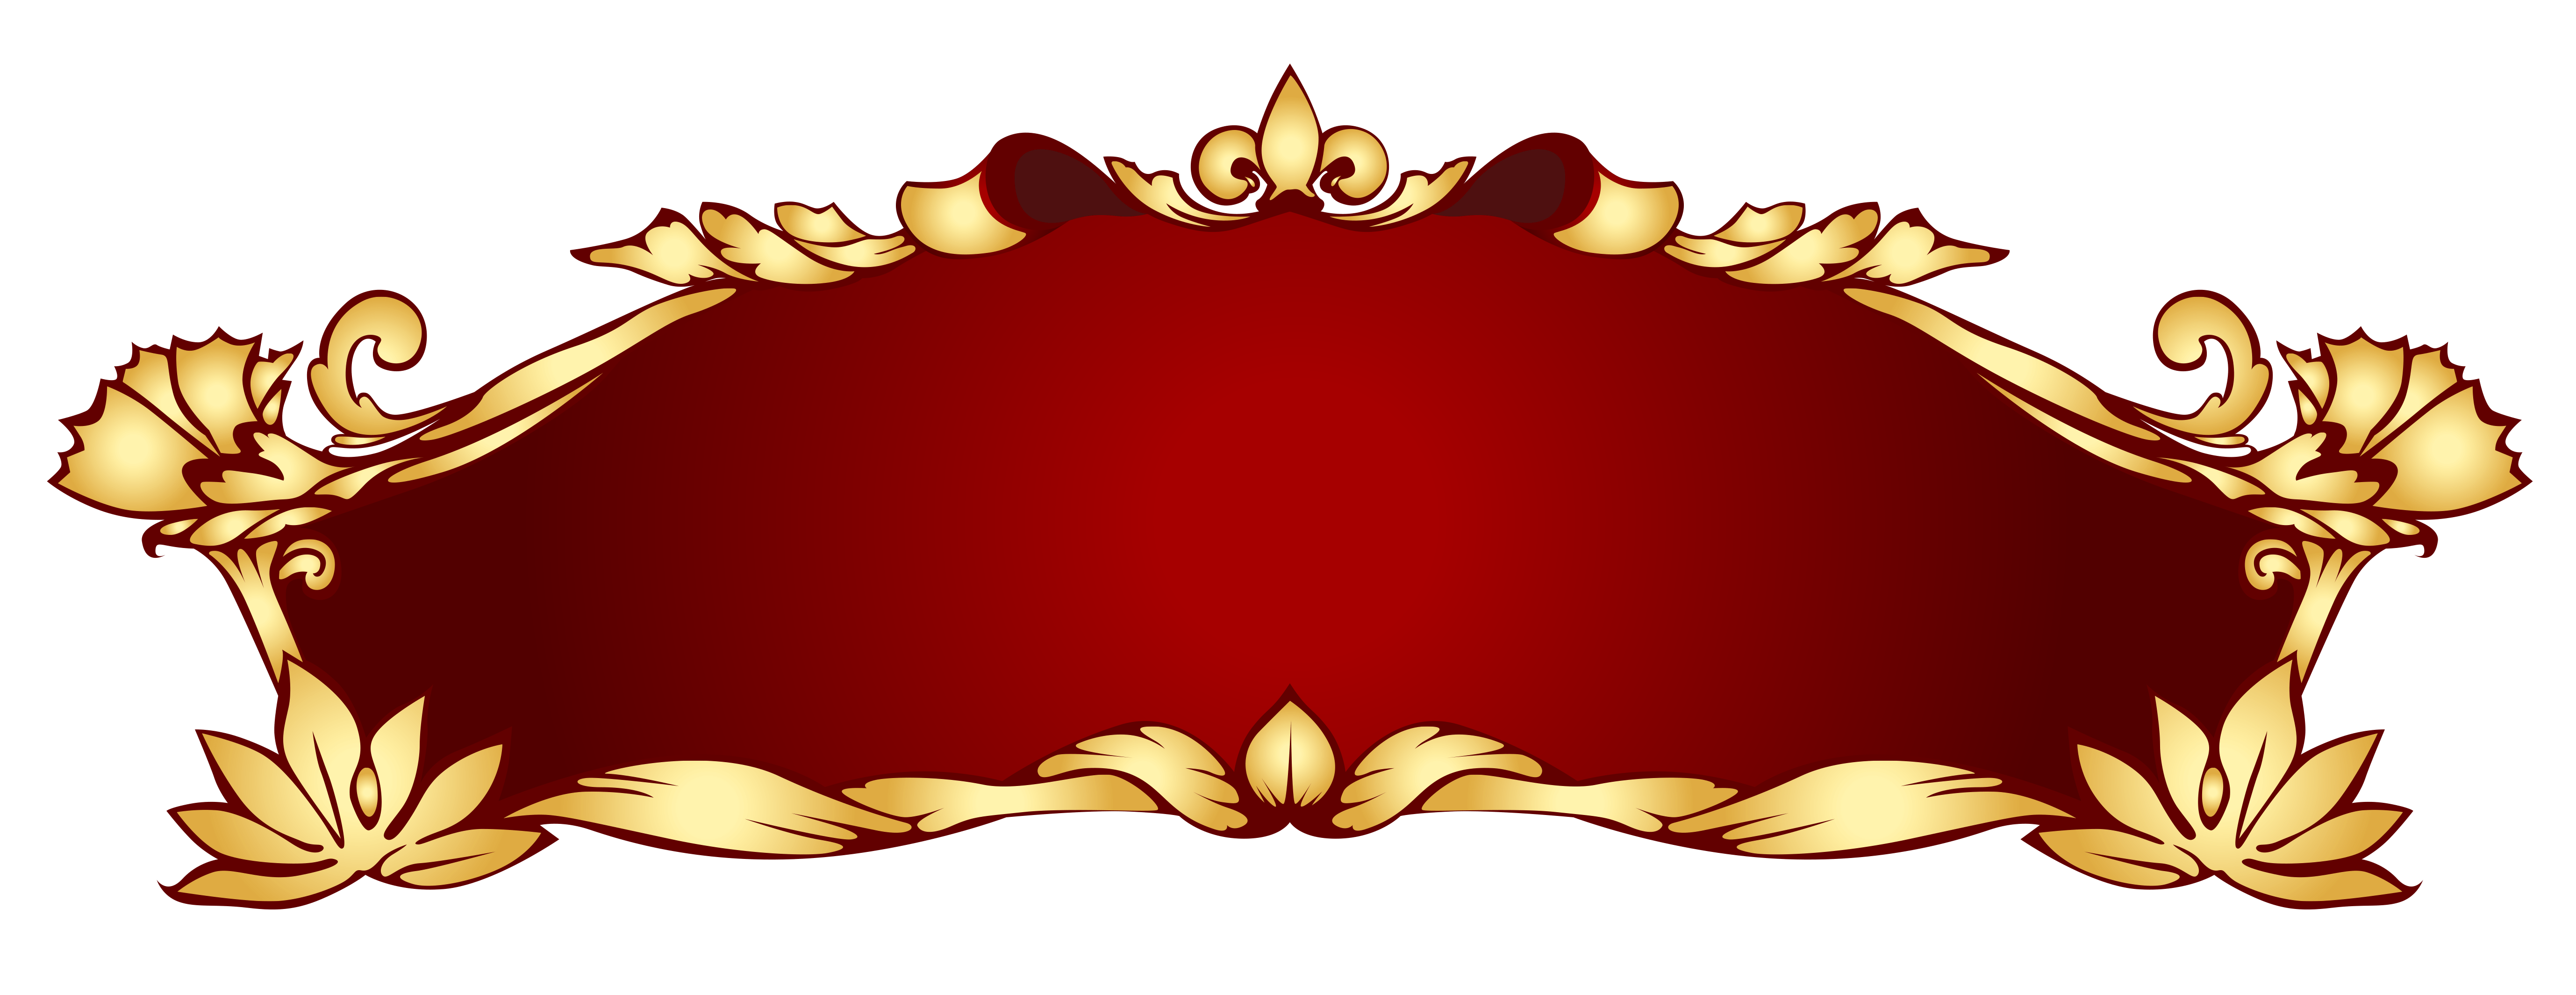 red clipart tiara